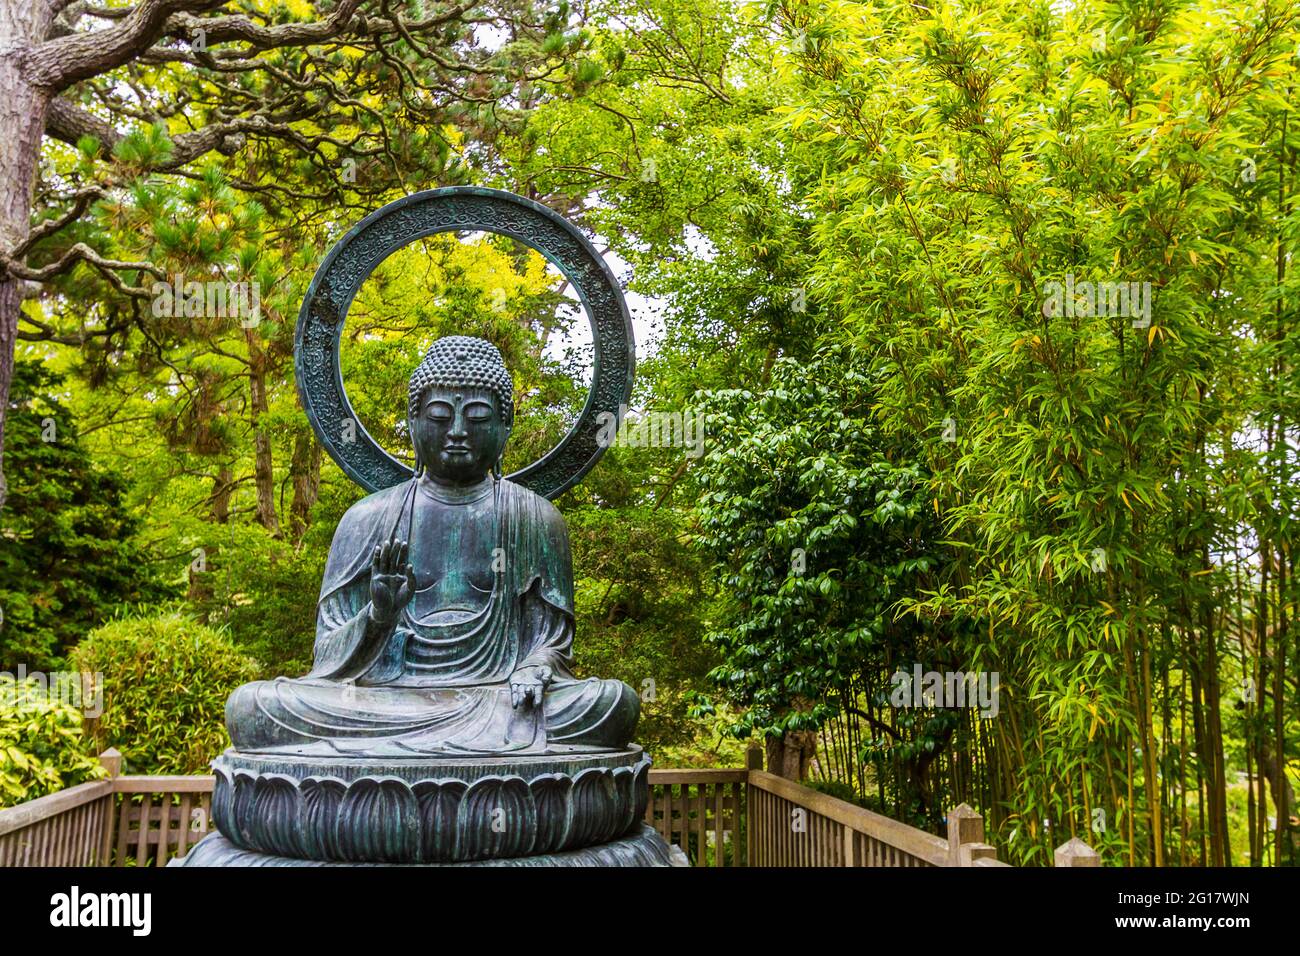 The Buddha Statue in Japanese Tea Garden, San Francisco Stock Photo